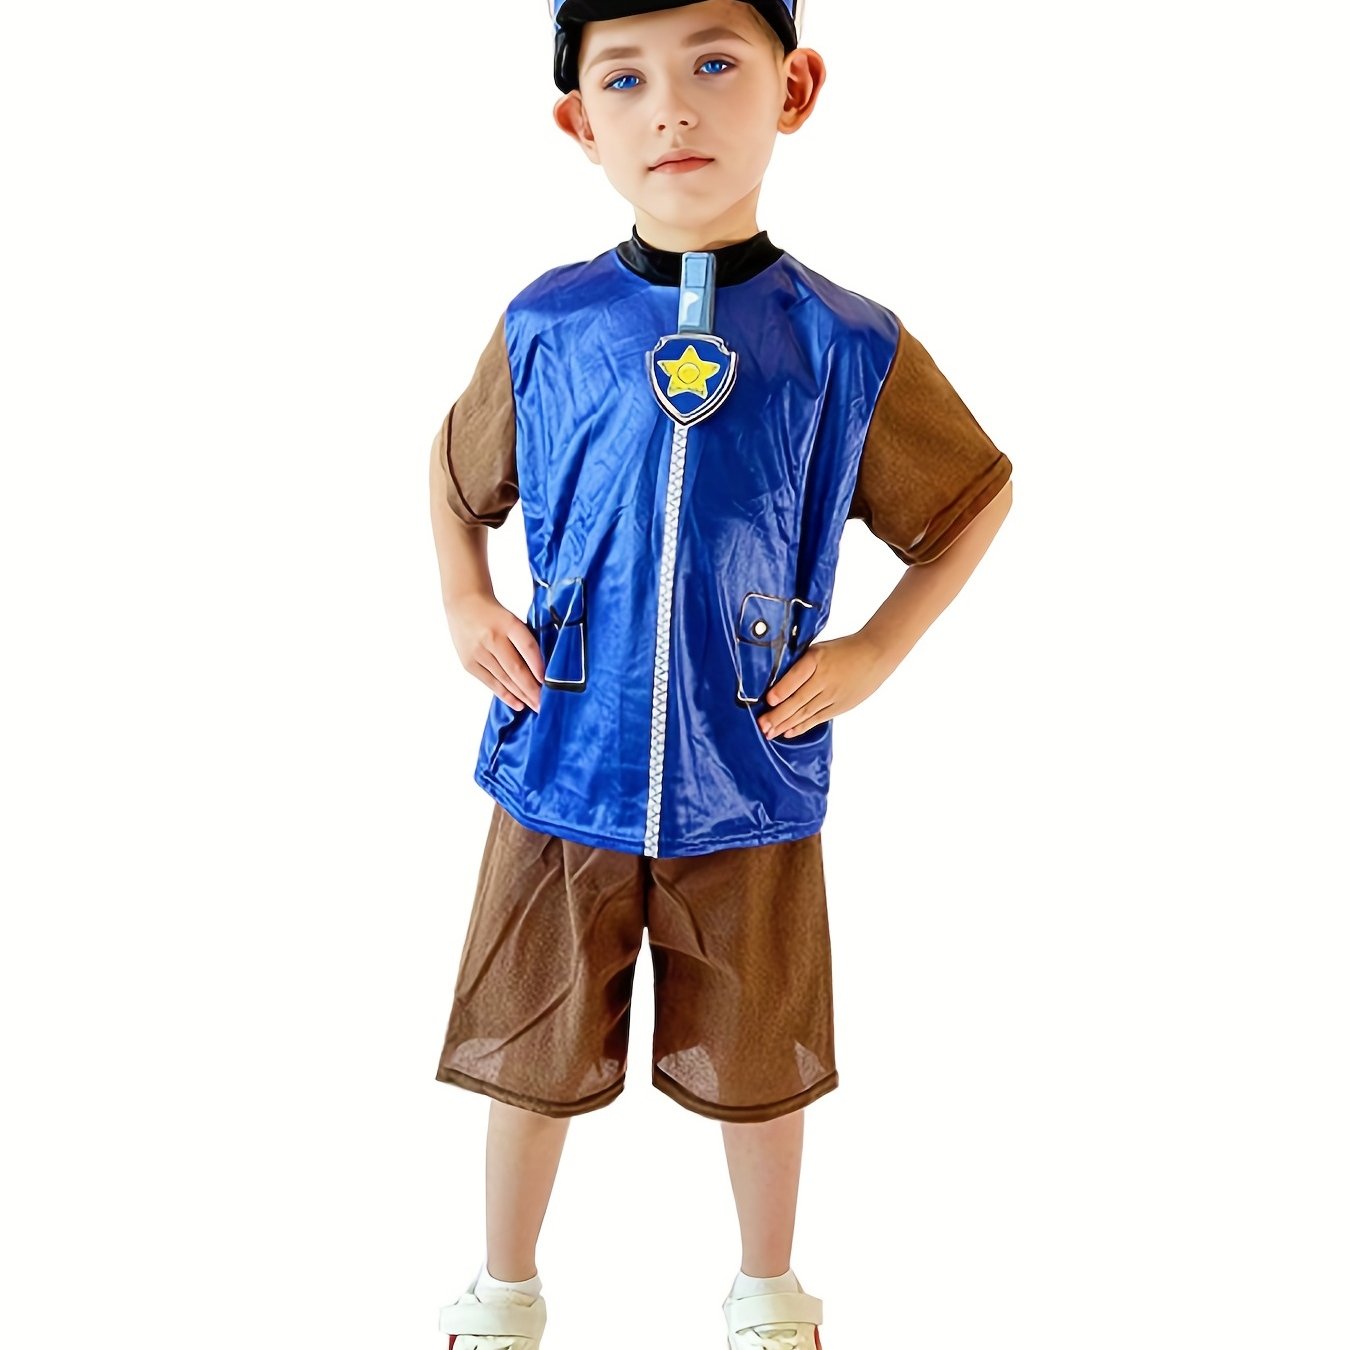 Boy's Cartoon Character Cosplay Costume, Halloween Dress Up Top